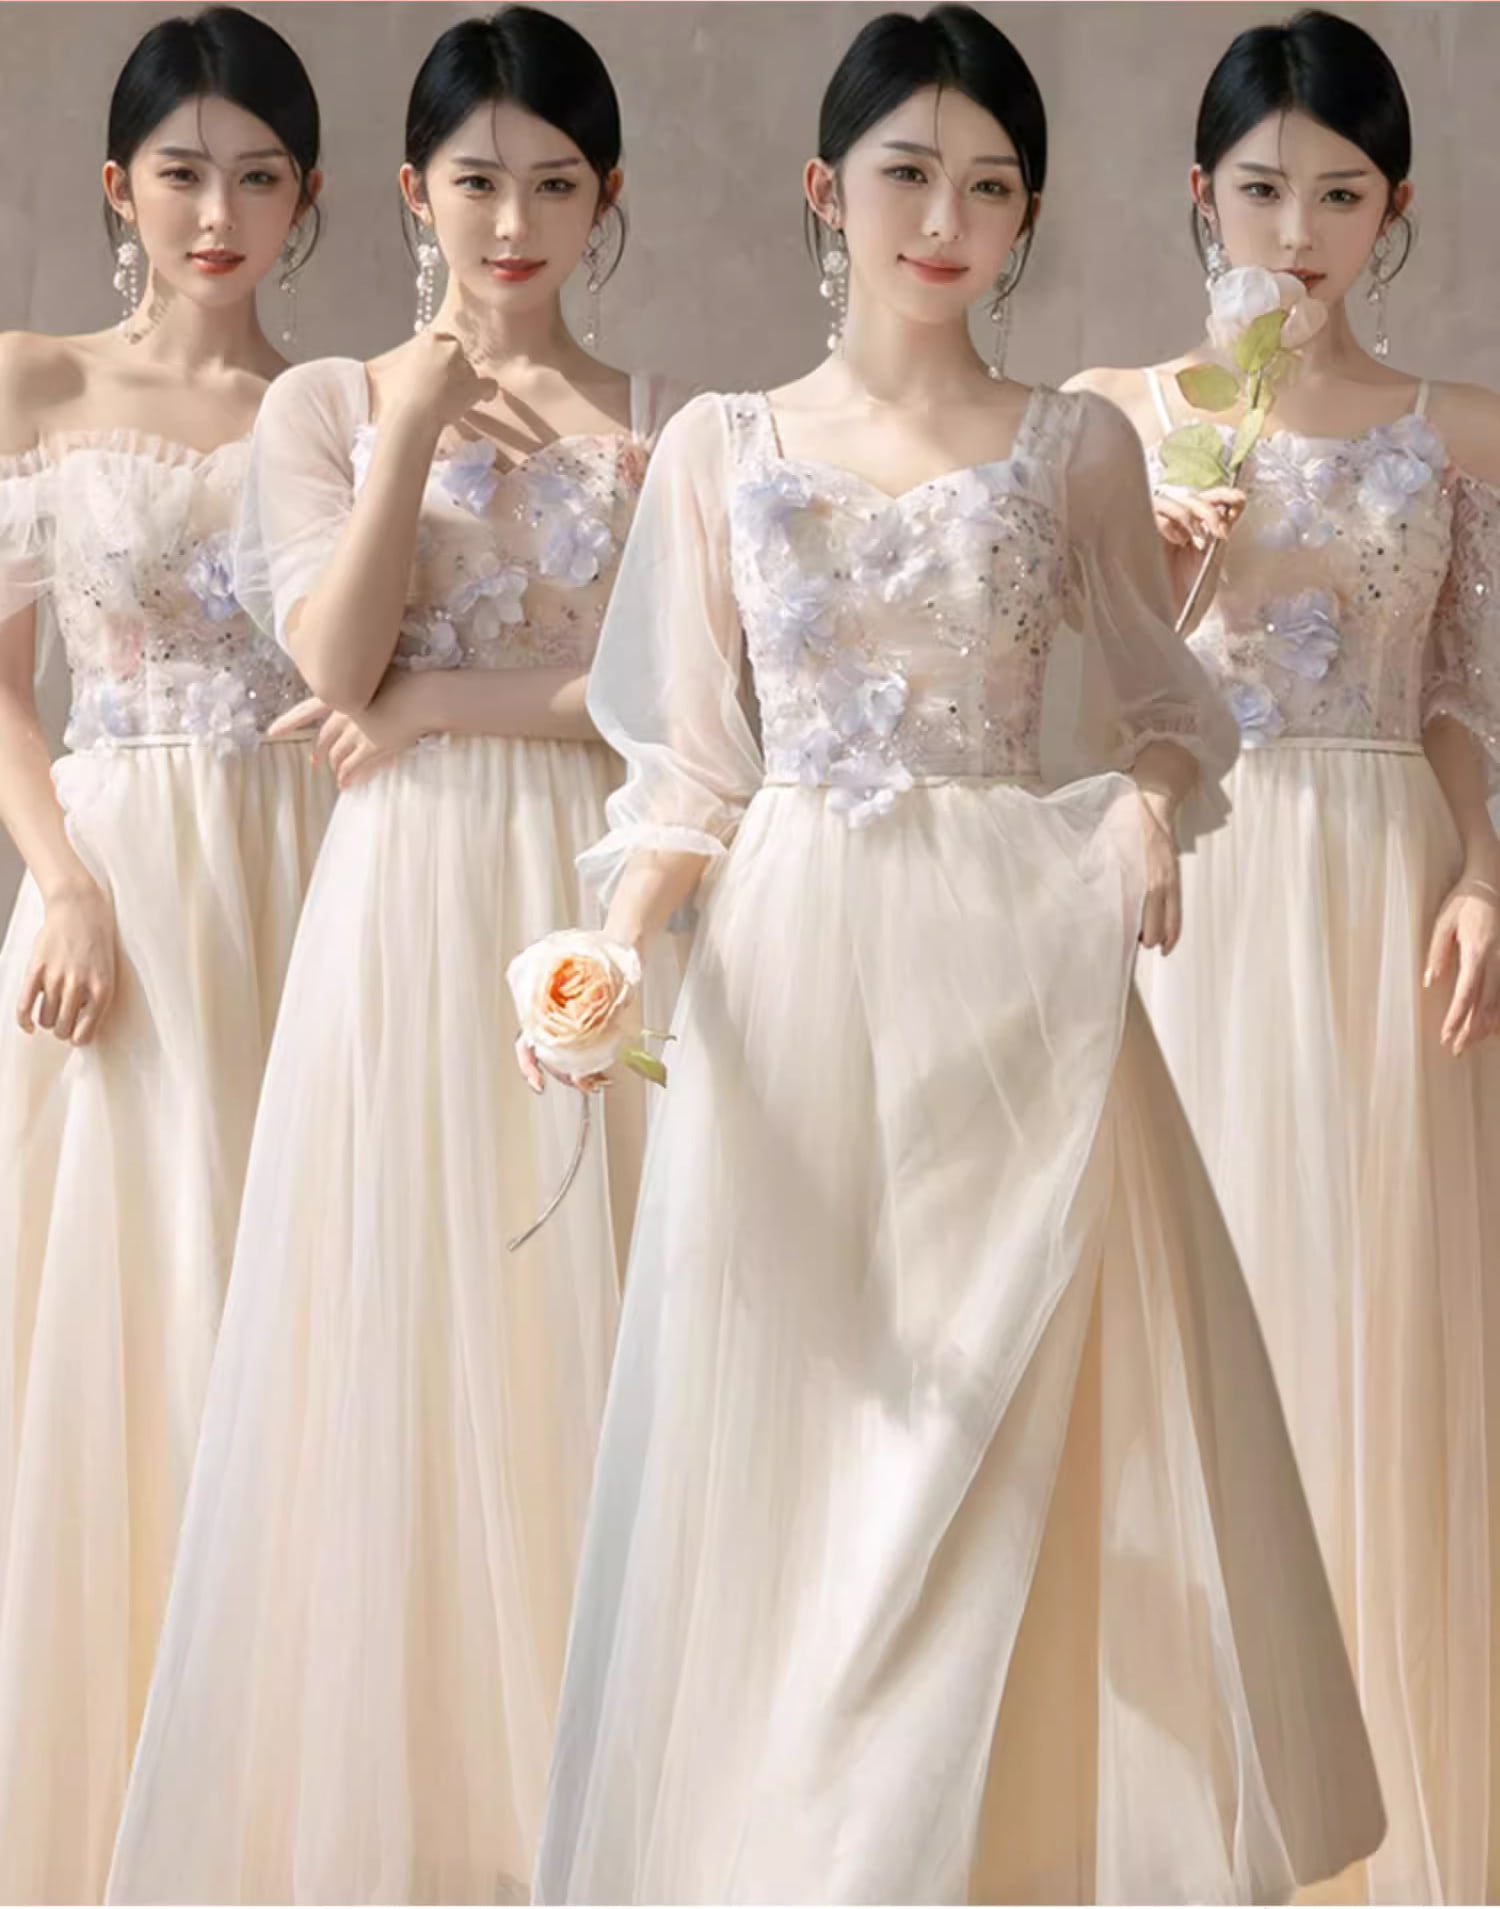 Romance-Flower-Champagne-Bridal-Party-Gown-Fashion-Bridesmaid-Dress11